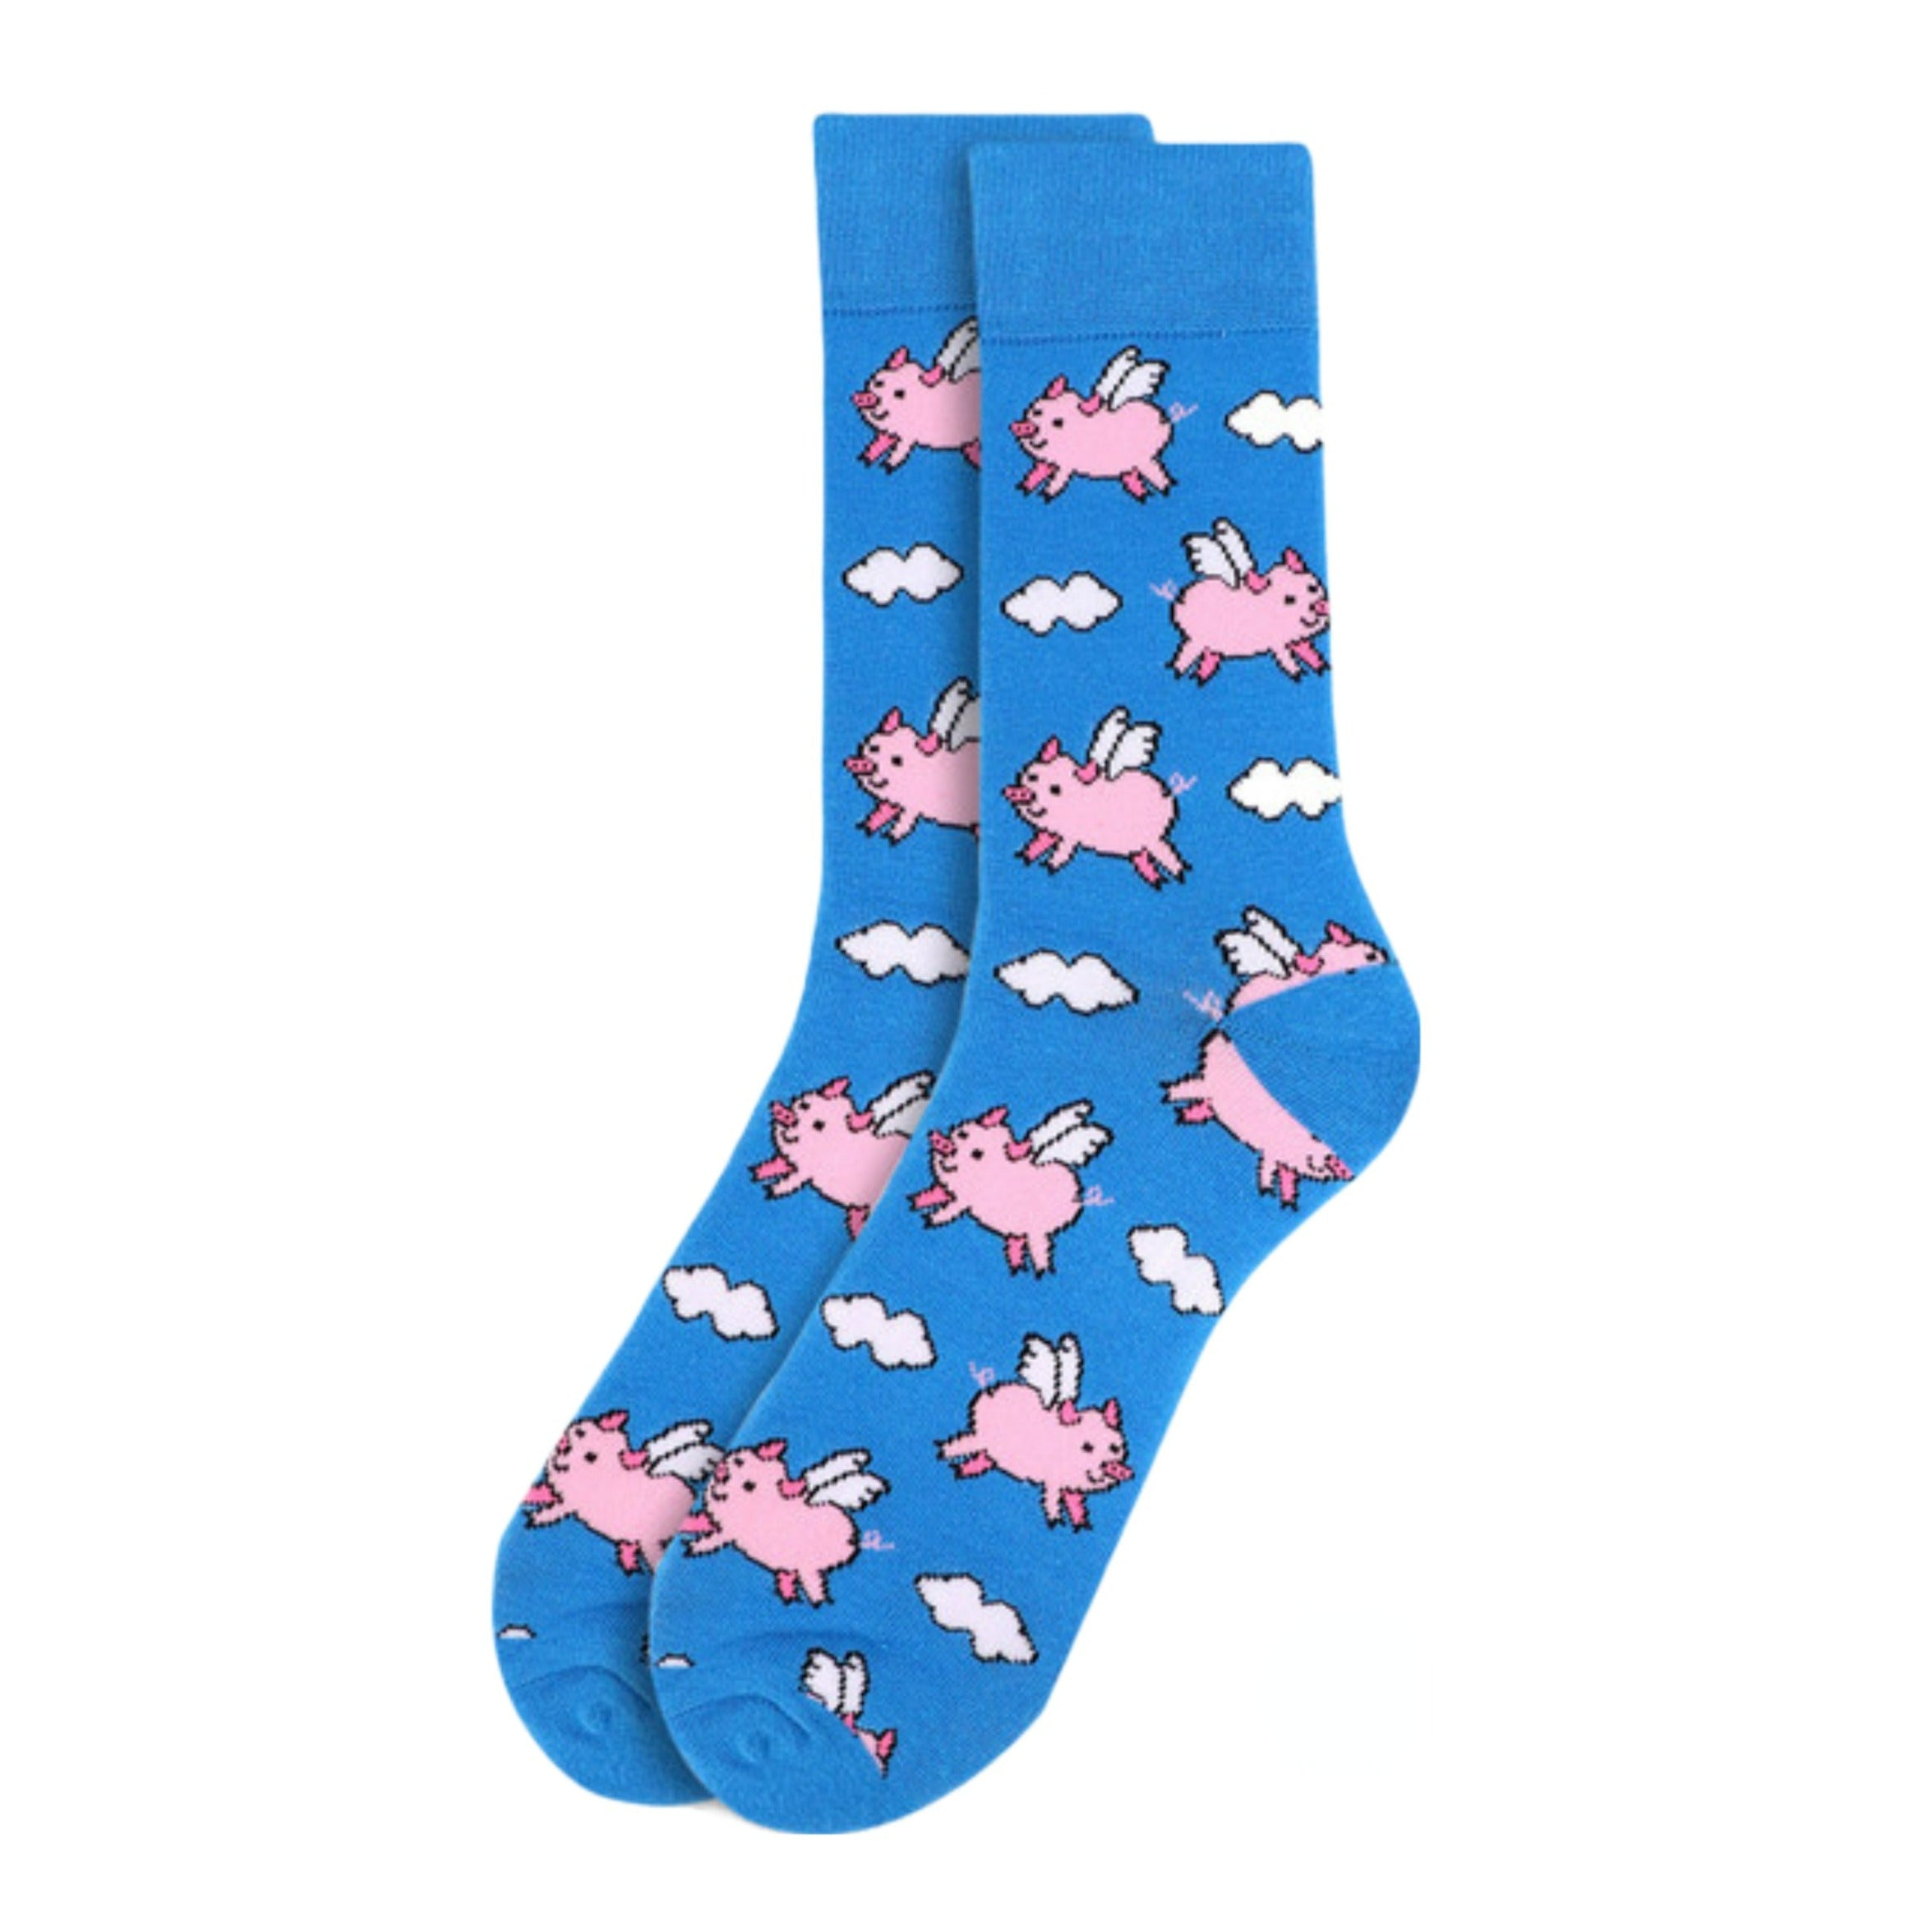 Flying Pigs Socks (Adult Large)